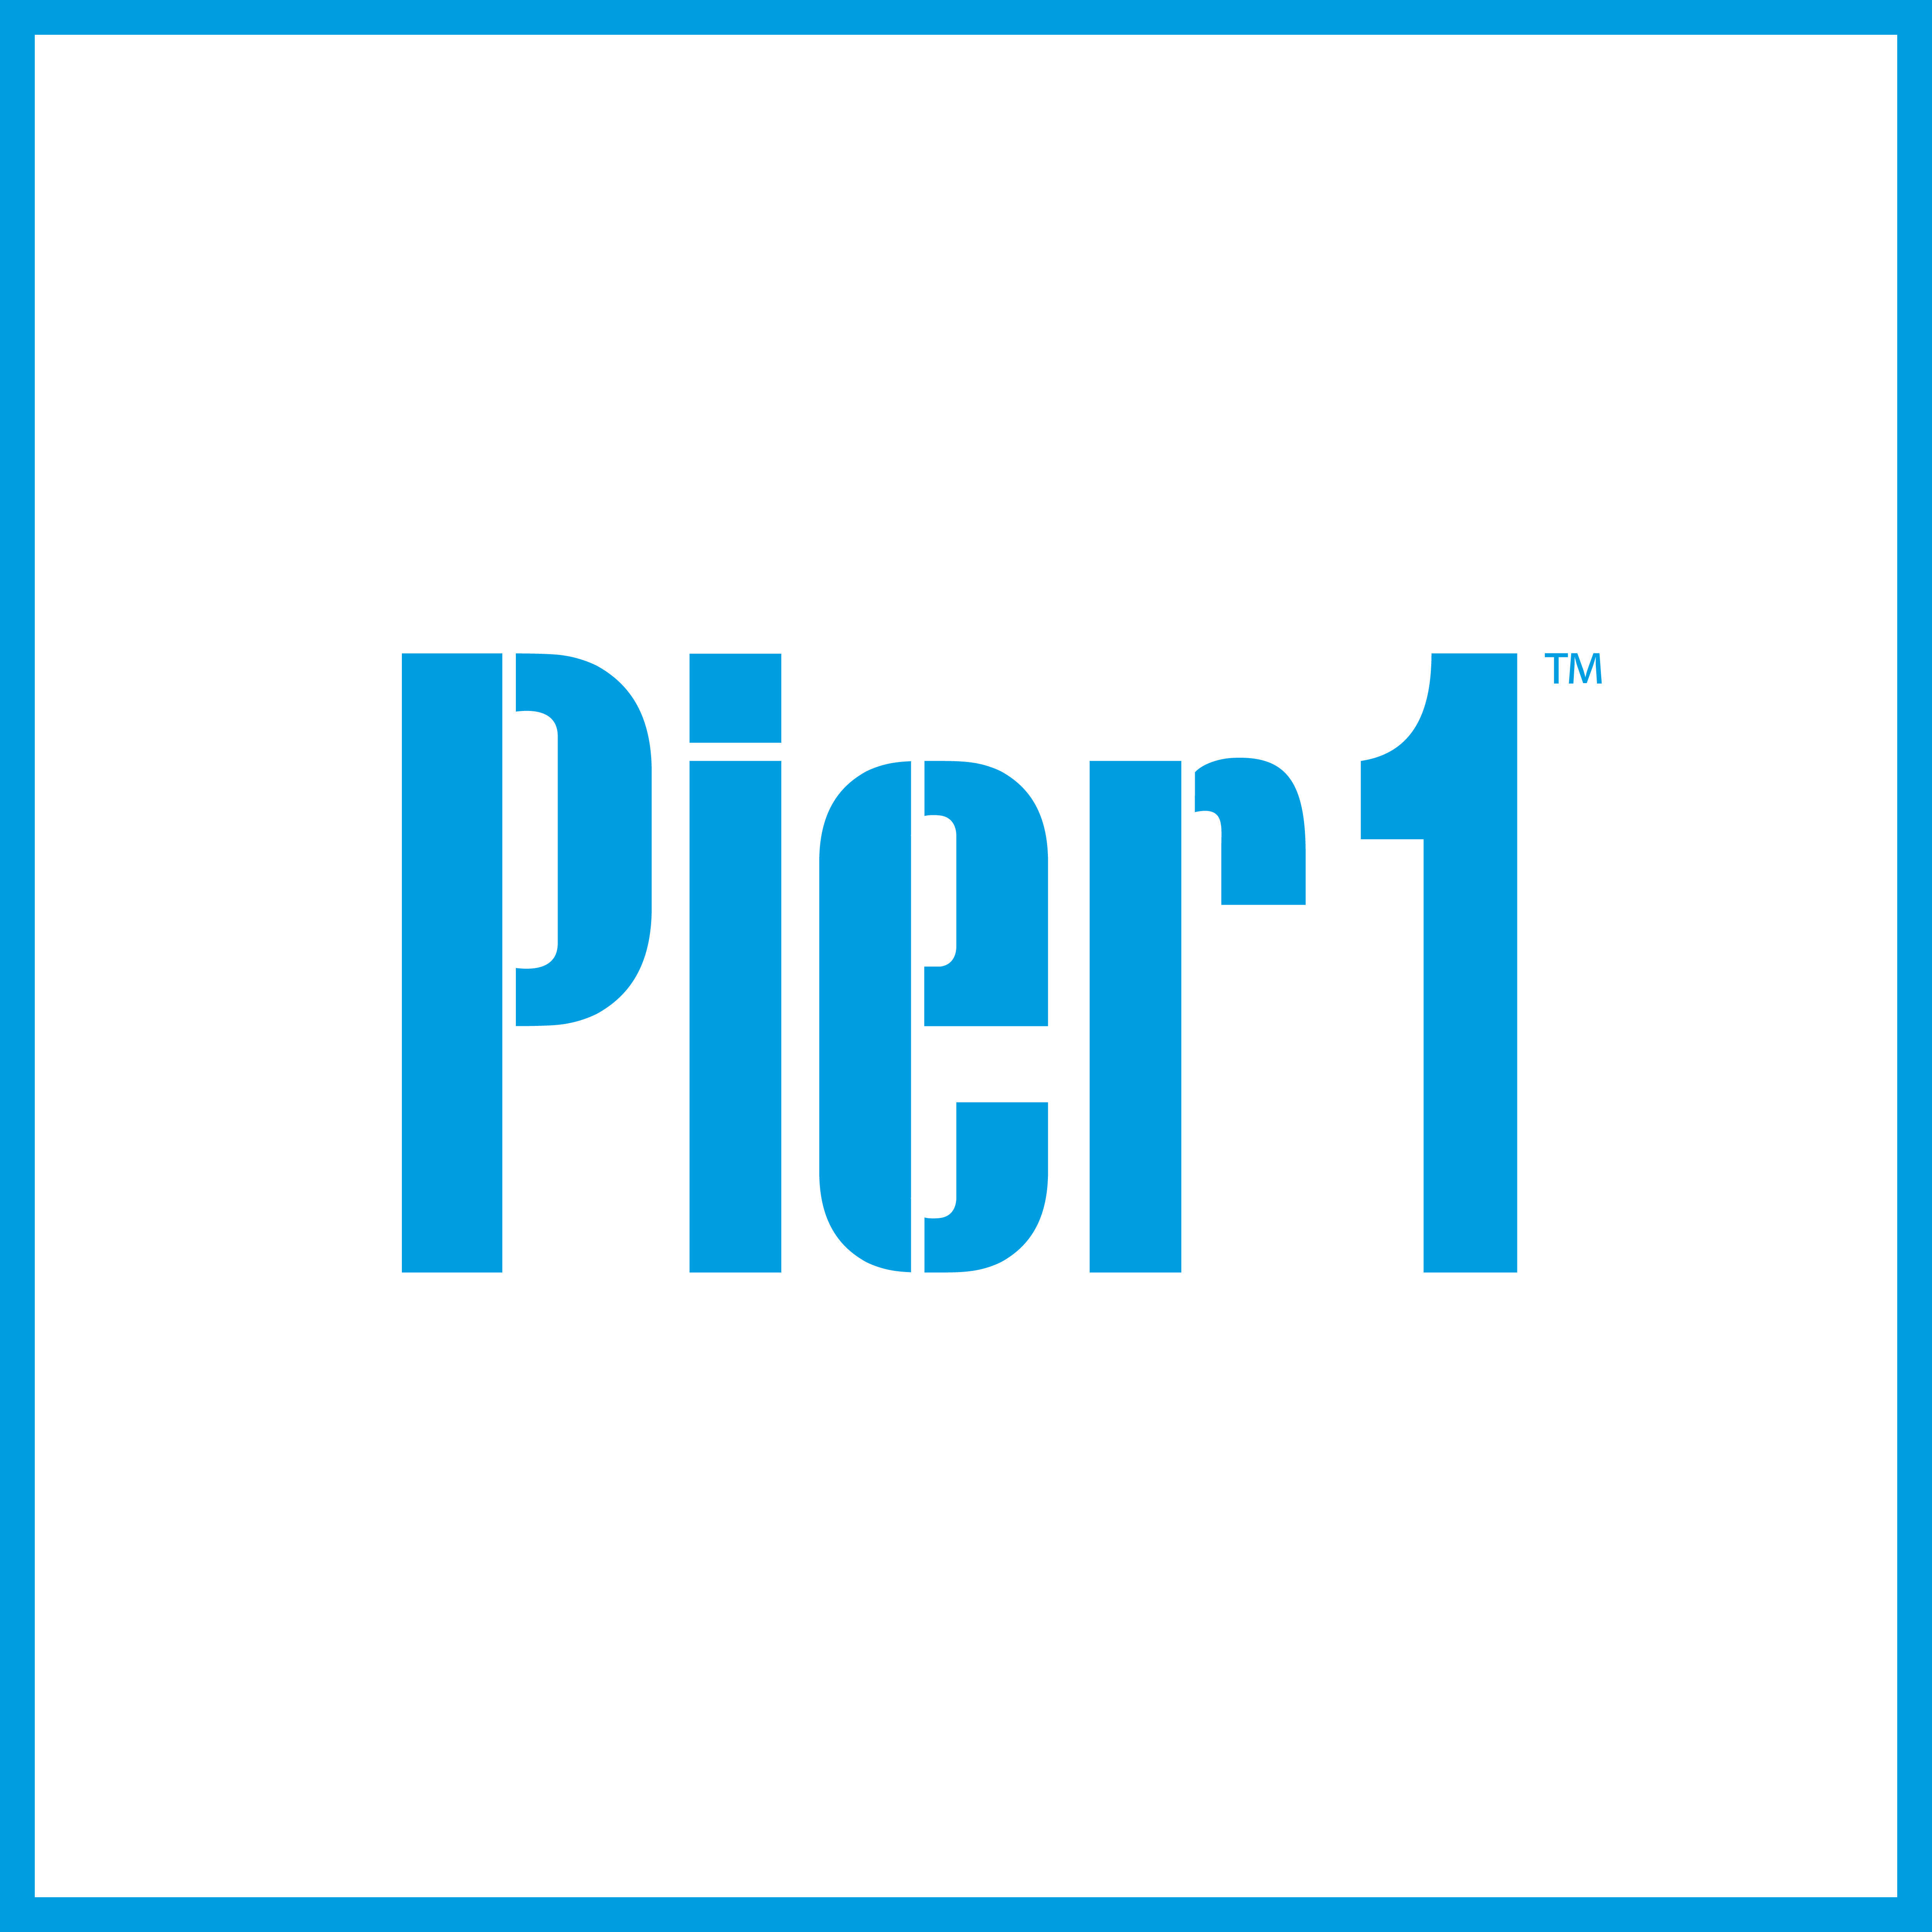 Pier 1 Imports. Pier one logo. Pier 1 Imports 1975586. Polim Pier logo.